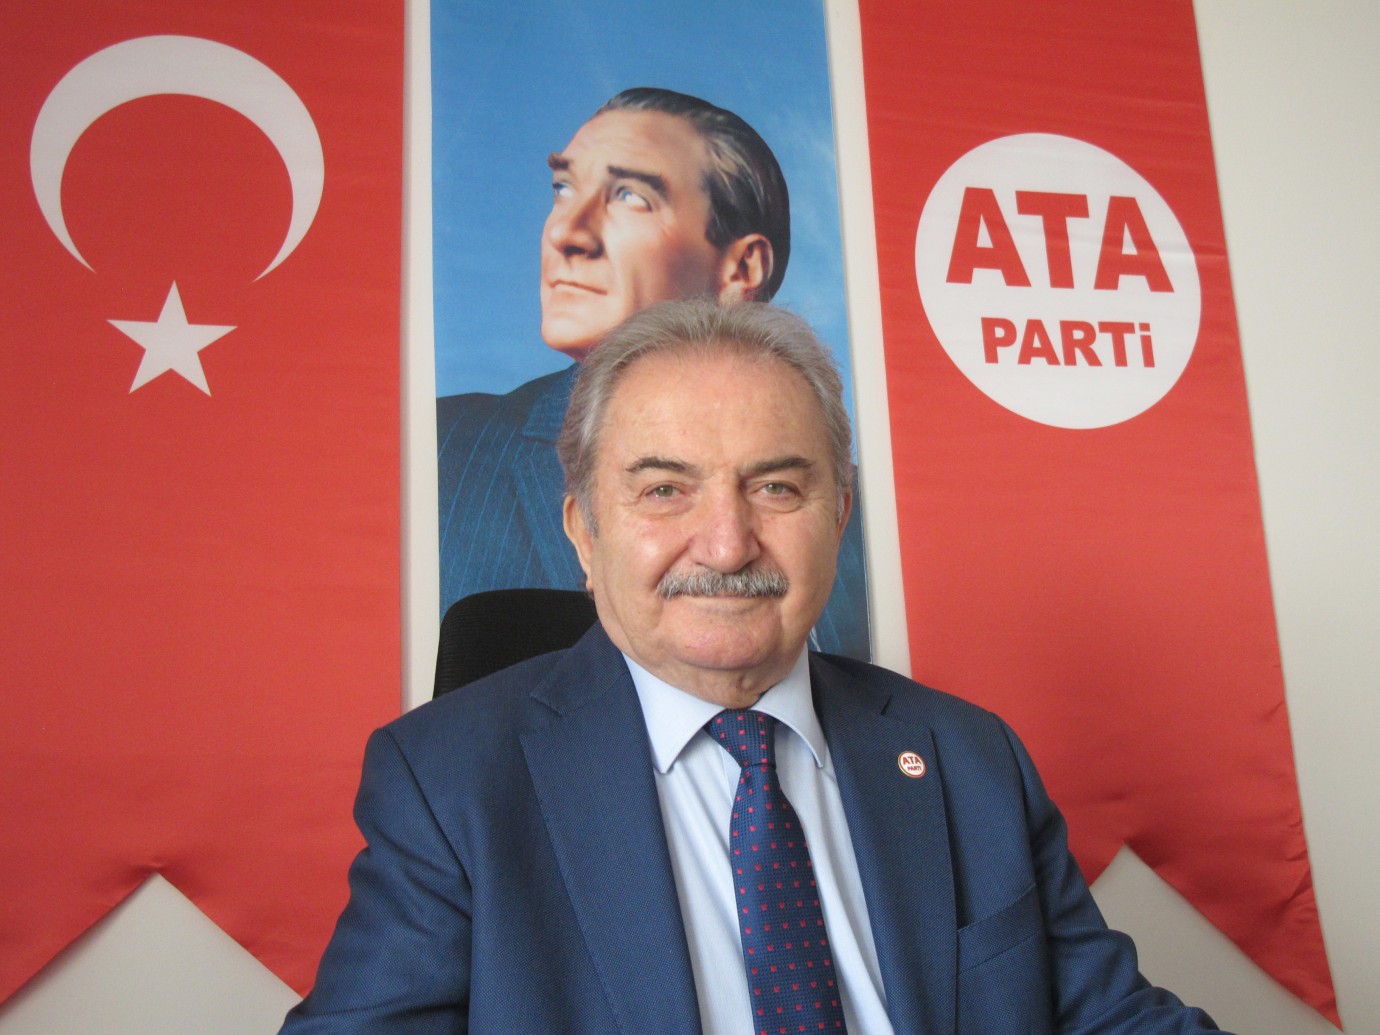  ATA Parti Genel Başkanı Zeybek,  Hem AKP’yi, hem CHP’yi eleştirdi